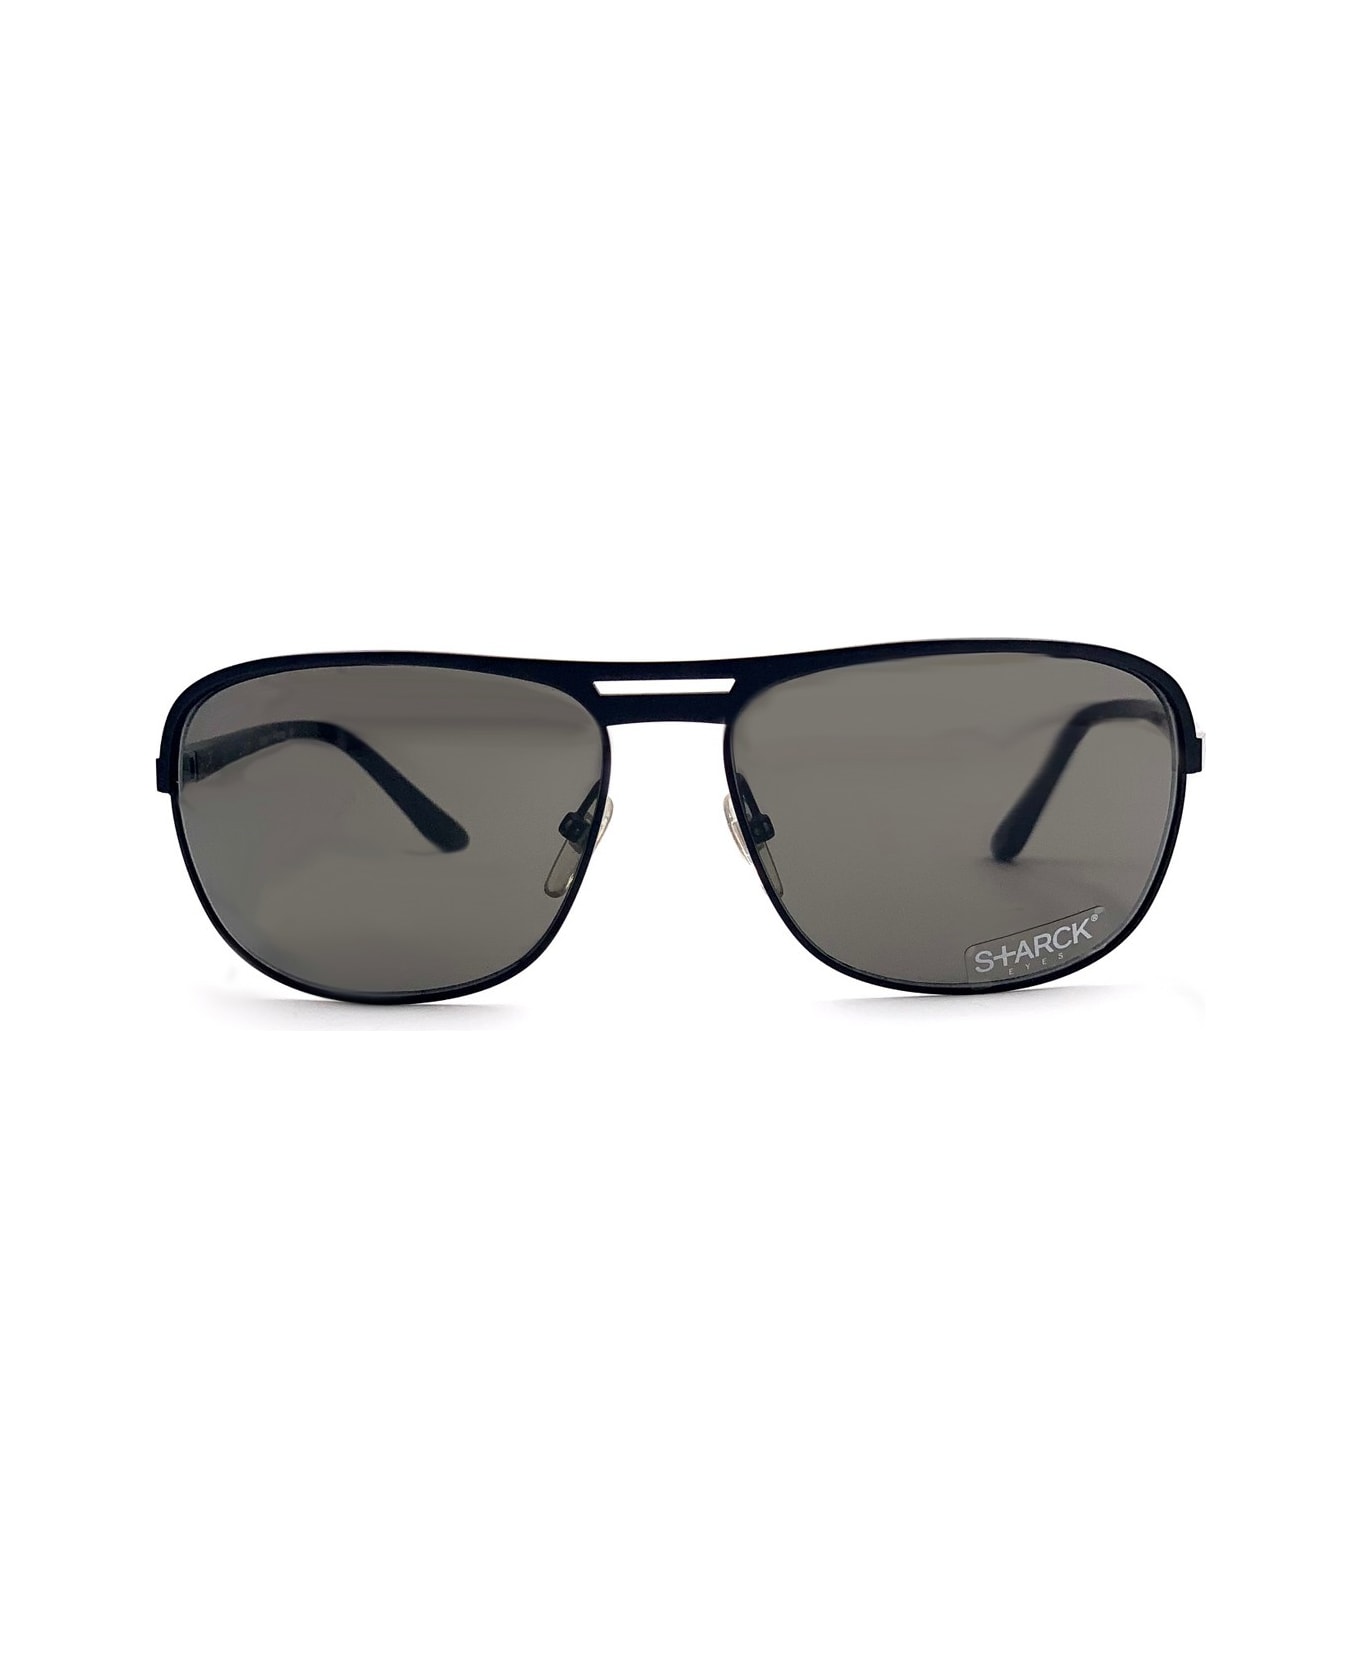 Philippe Starck Starck Pl 1251 Sunglasses - Nero サングラス